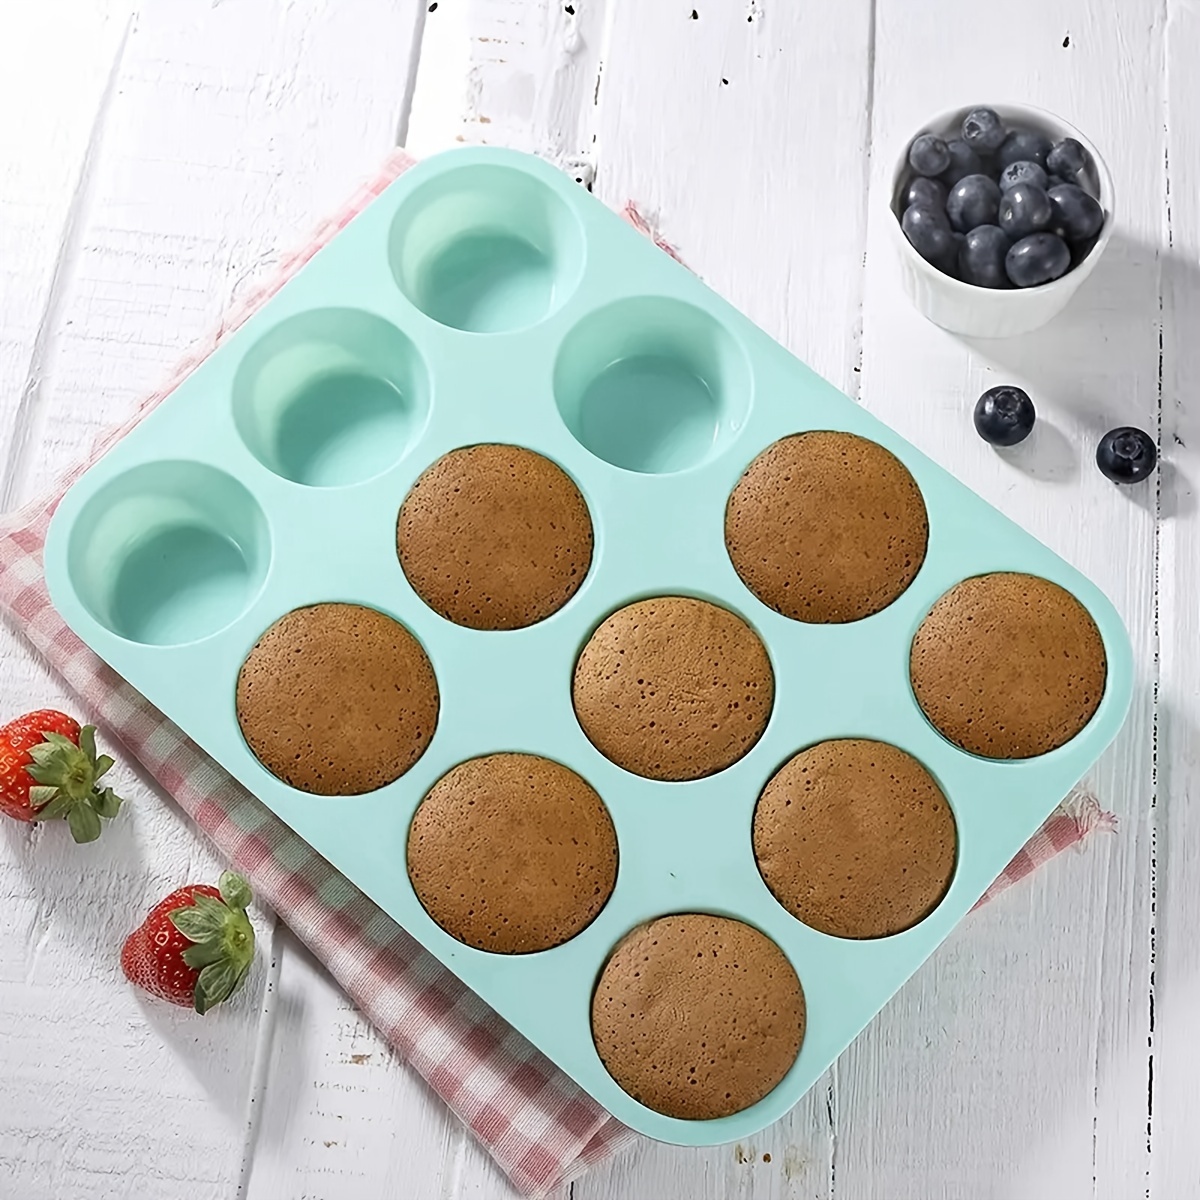 Silicone Muffin Pan12 Cup Large,Non-Stick Jumbo Muffin Pan,Food Grade Silicone Baking Pan - BPA Free and Dishwasher Safe, Green